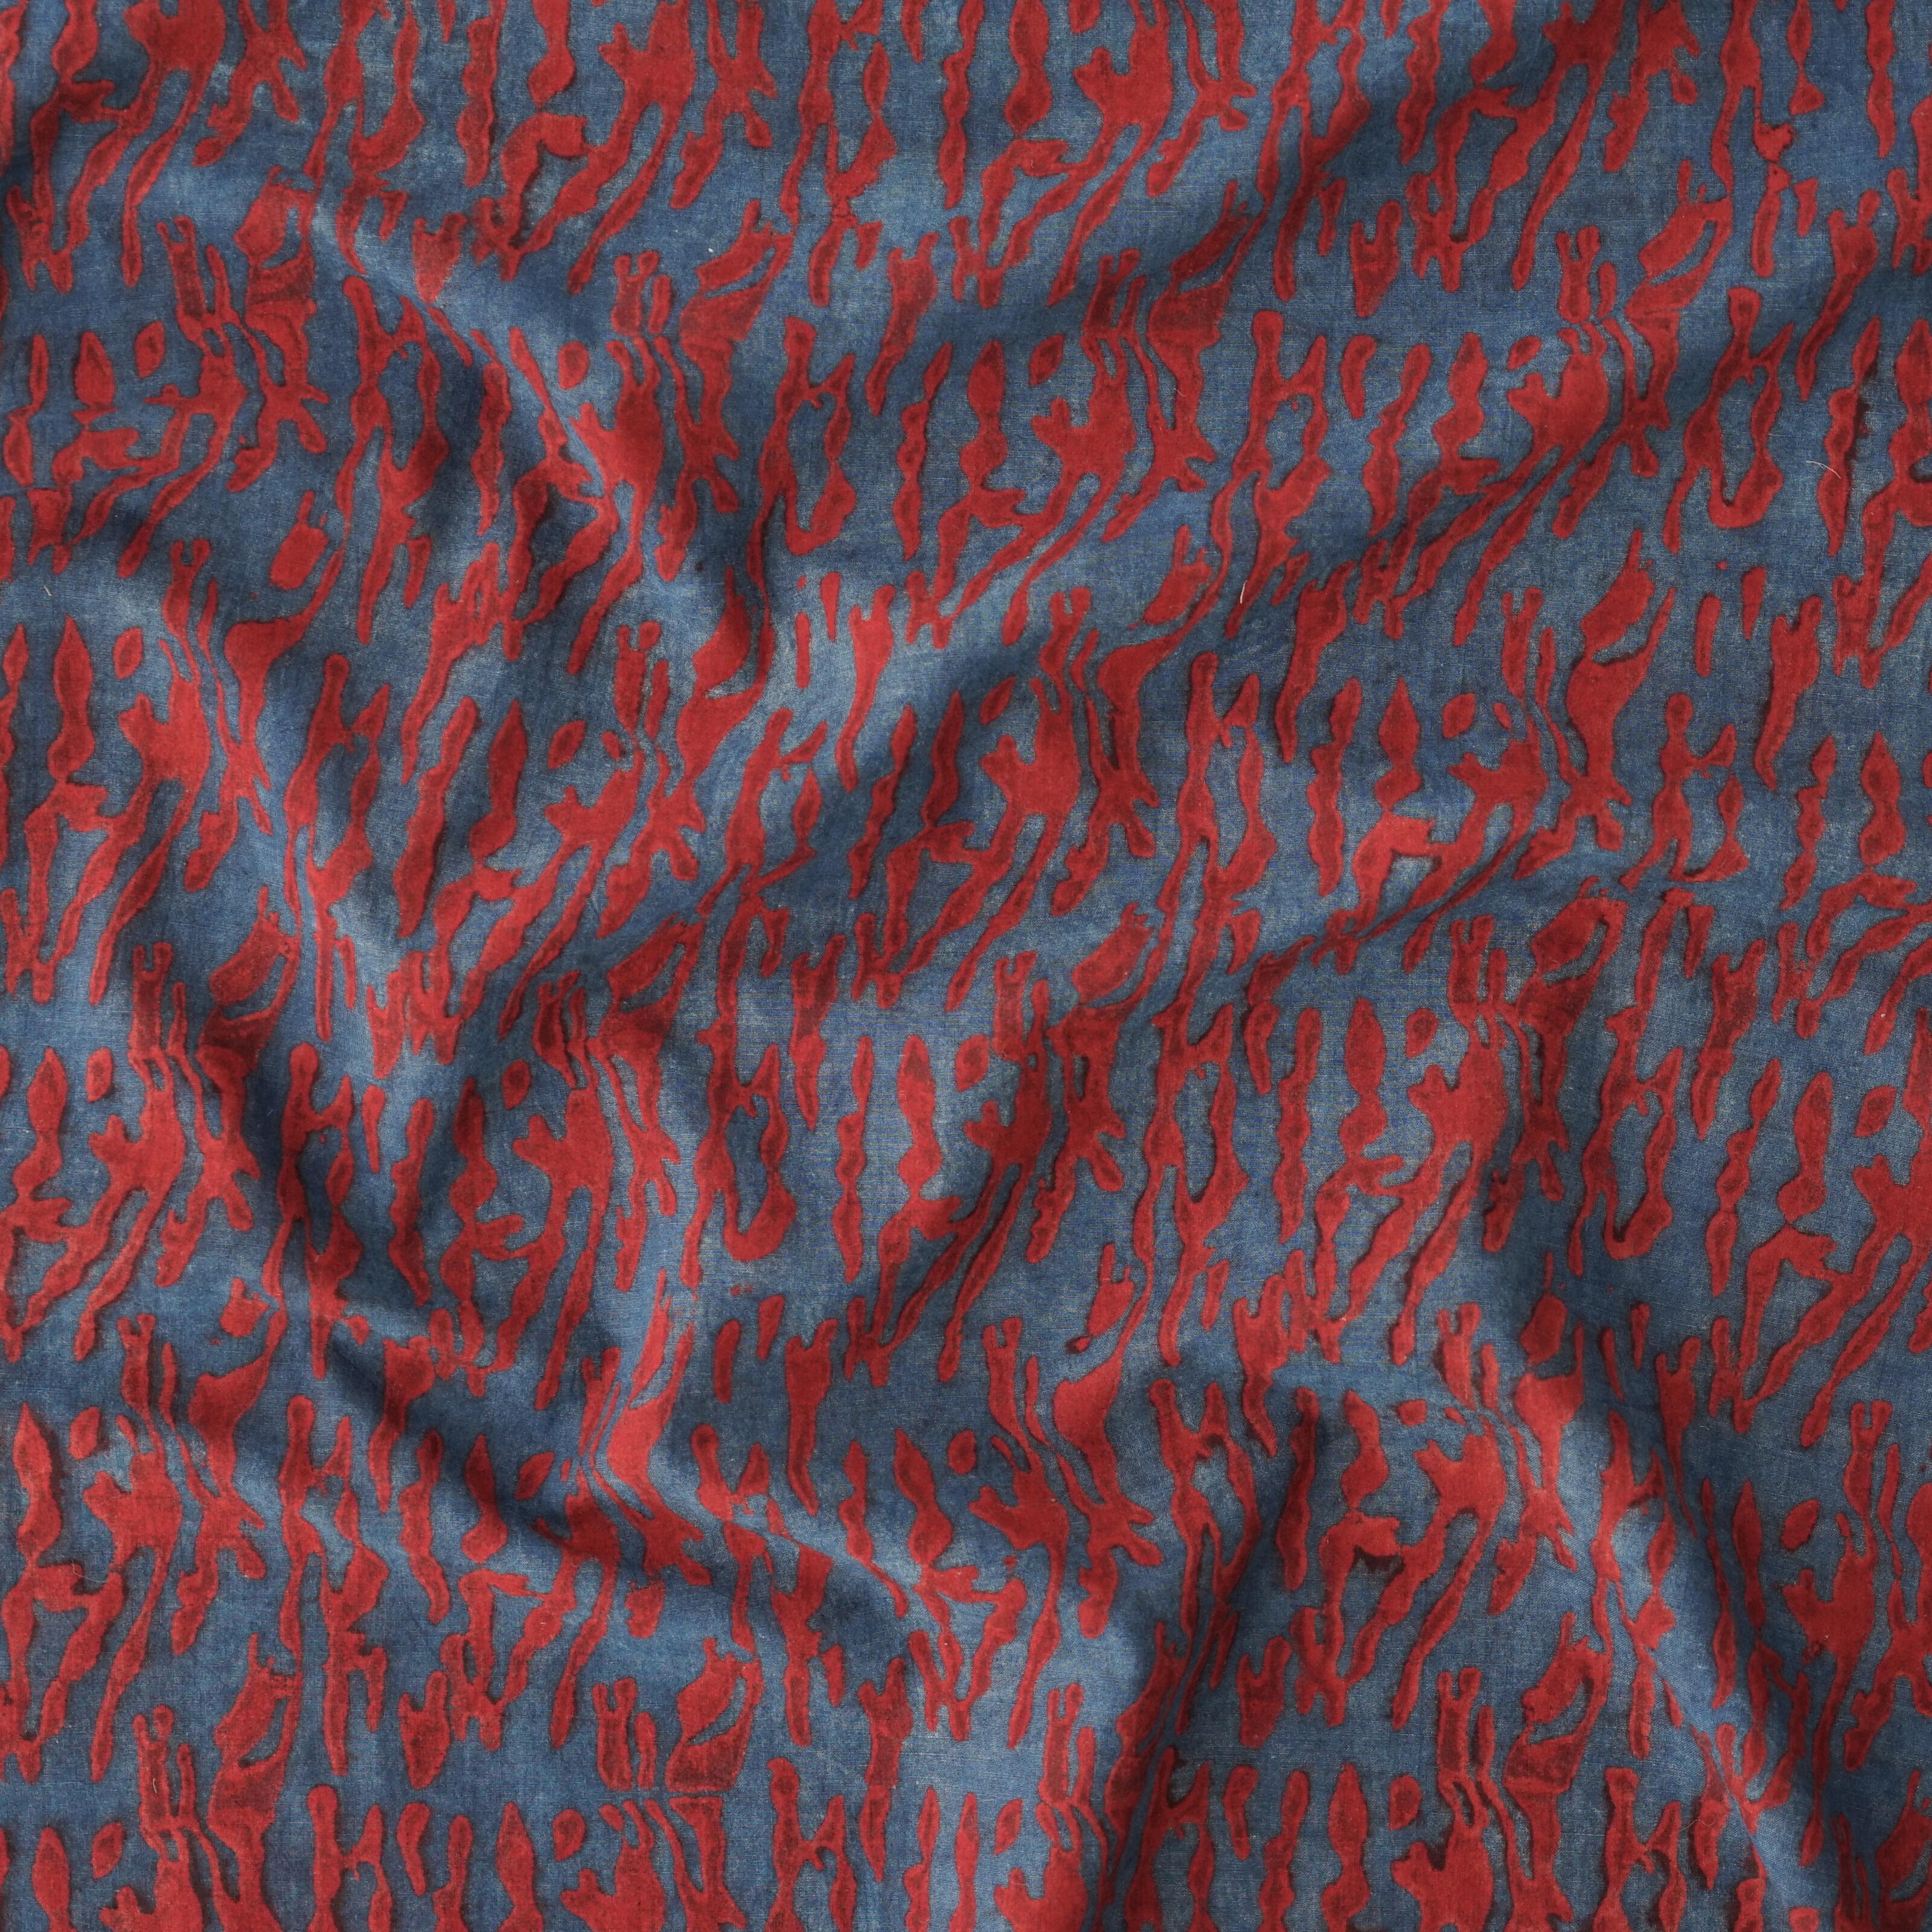 100% Block-Printed Cotton Fabric from India - Ajrak - Indigo Alizarin Tiger Print - Contrast